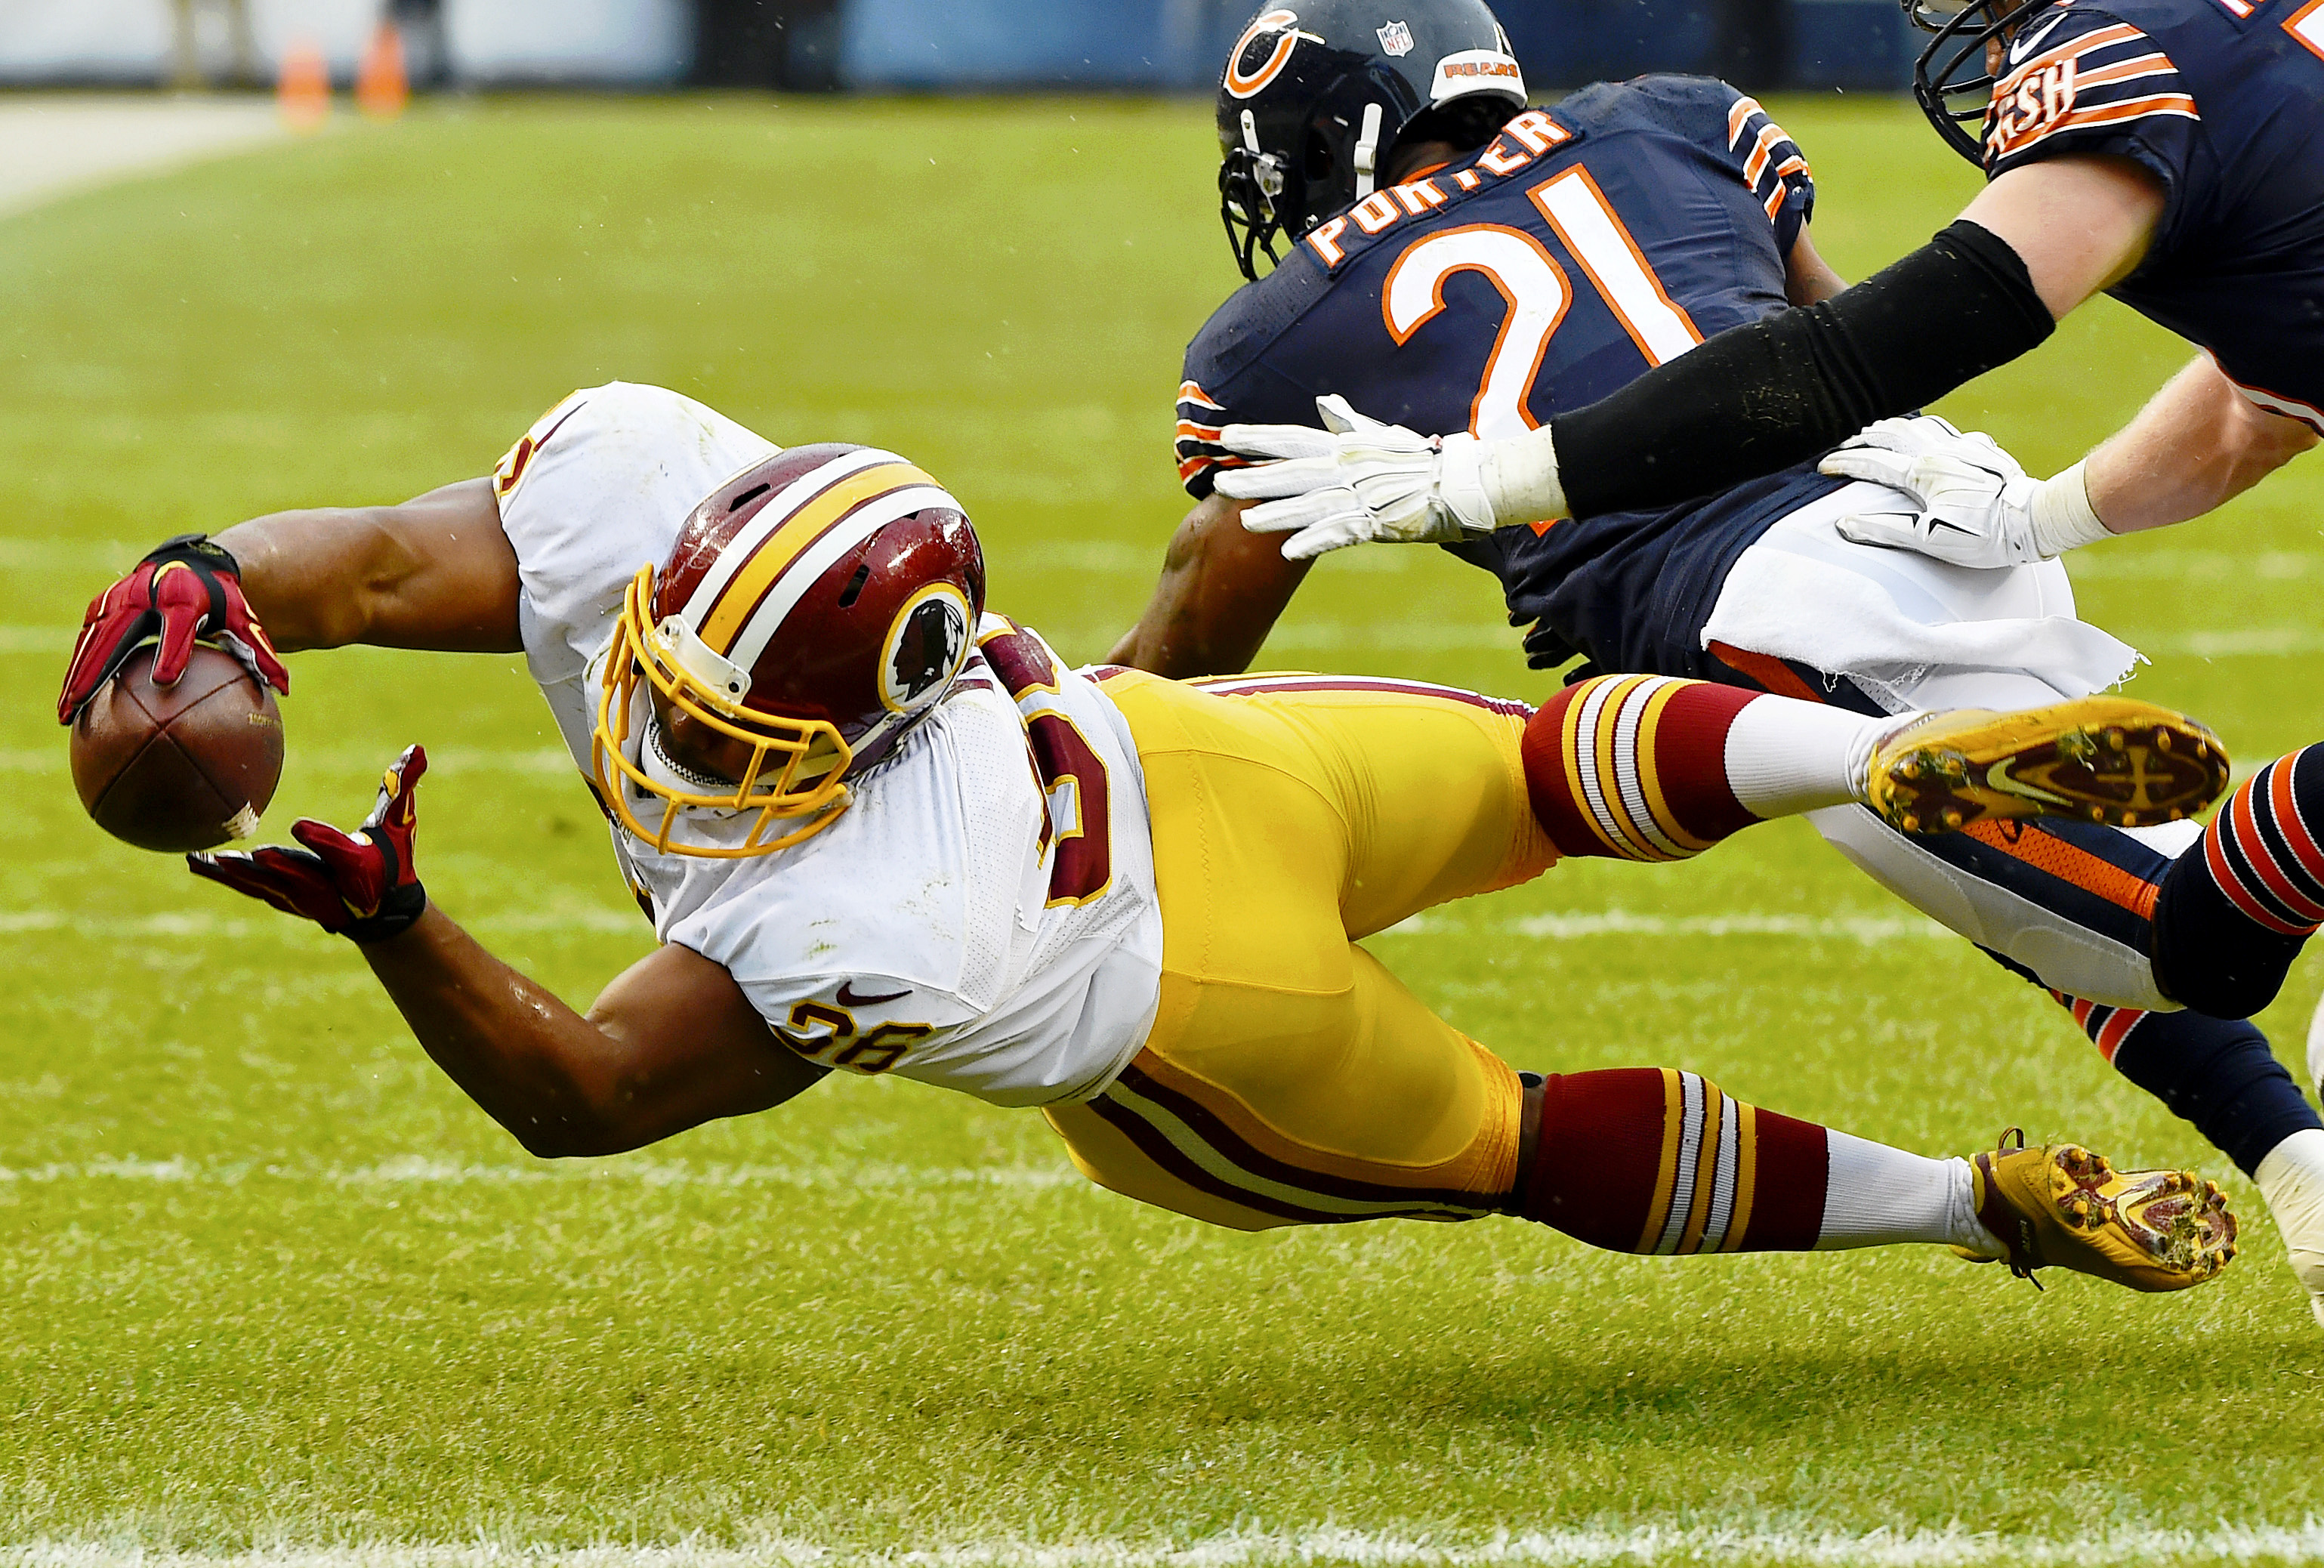 NFL: Washington Redskins at Chicago Bears